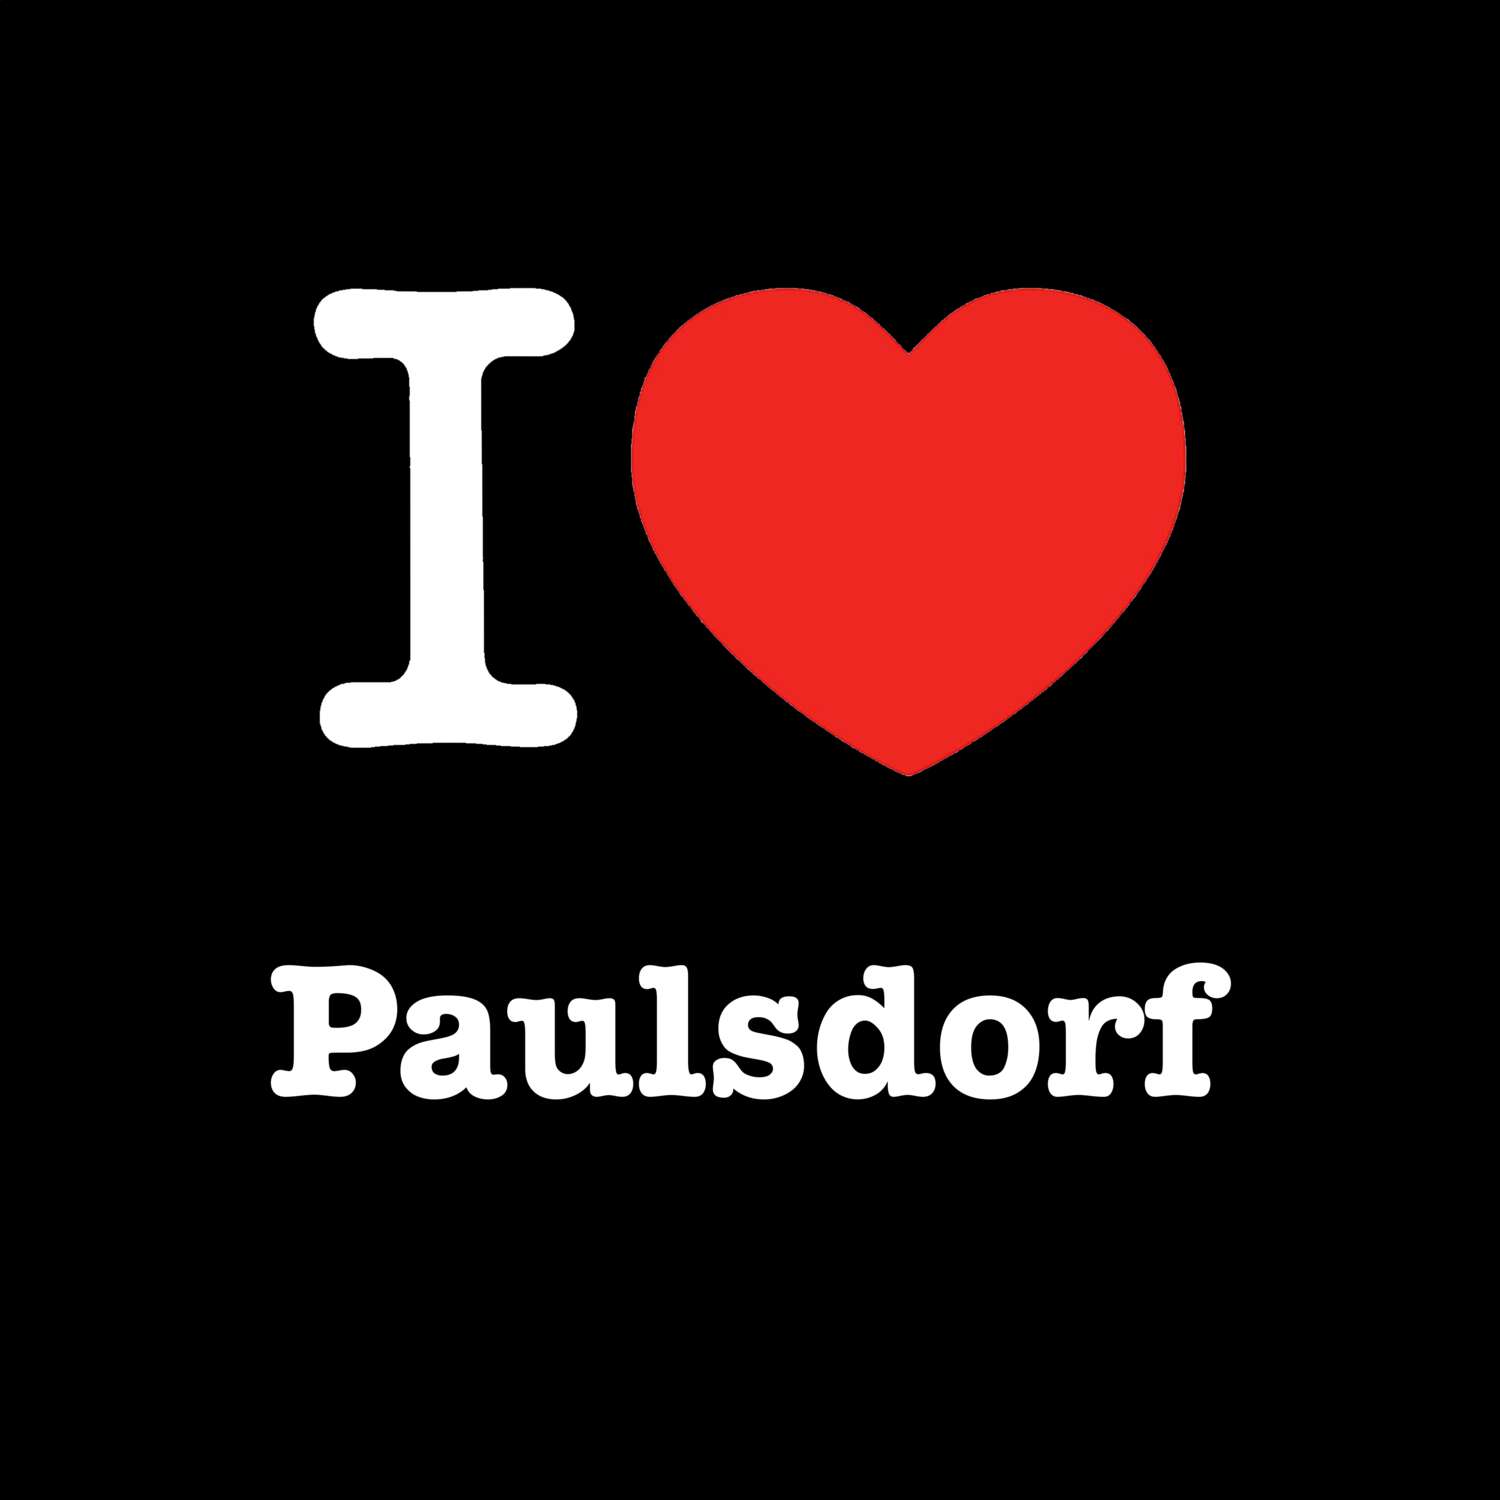 Paulsdorf T-Shirt »I love«